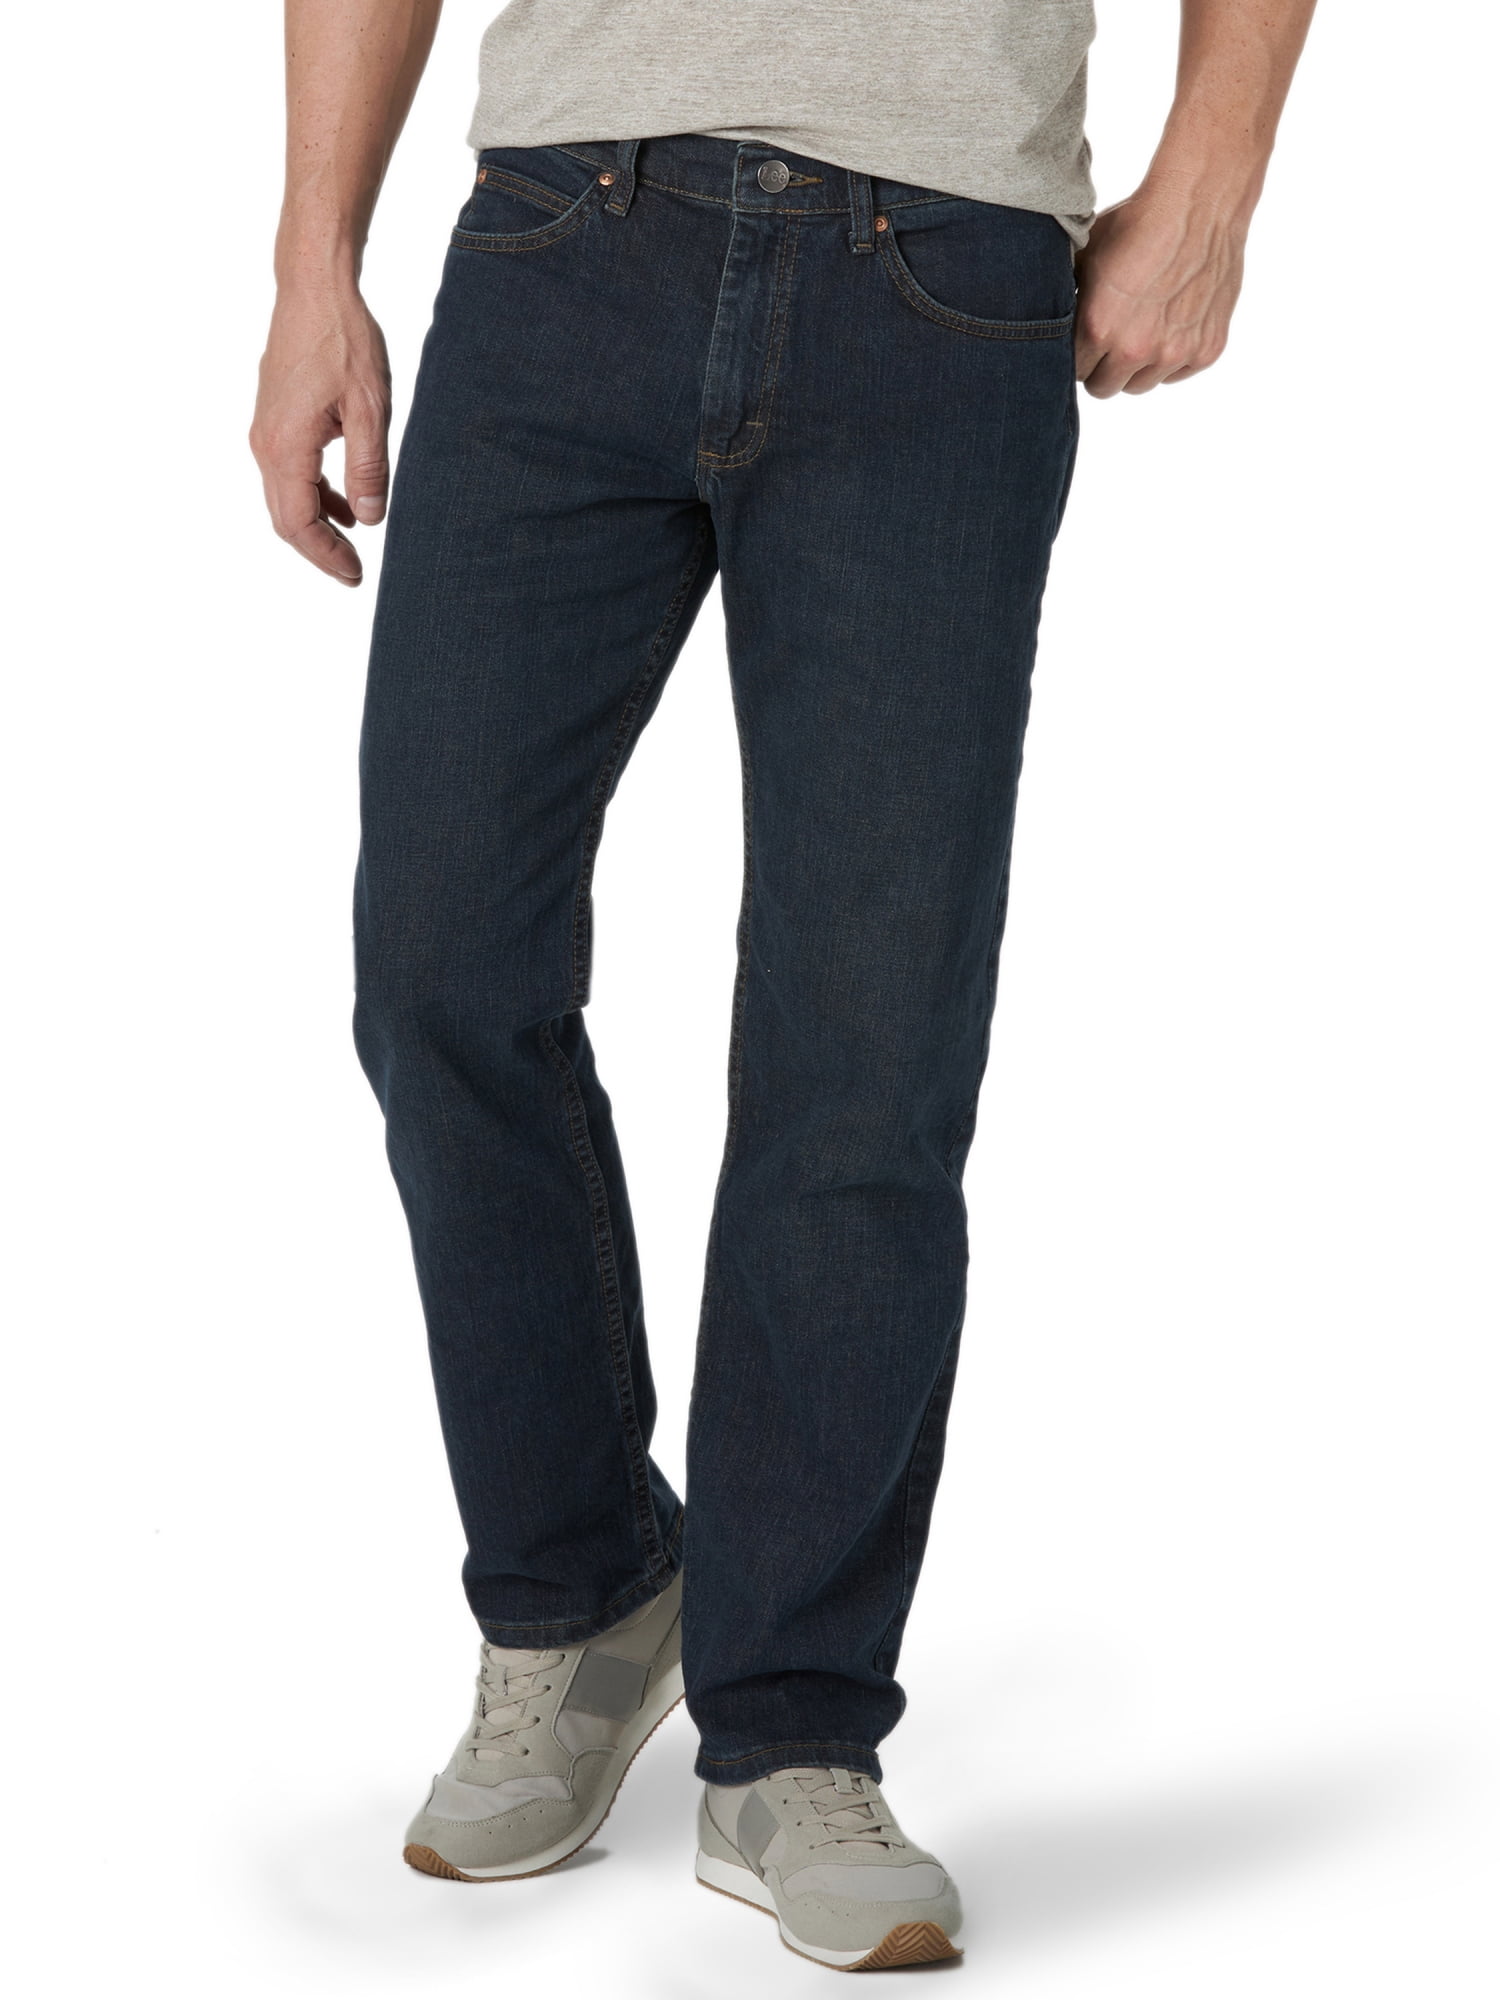 Lee Men's Legendary Denim Regular Straight Five Pocket Jeans - Walmart.com